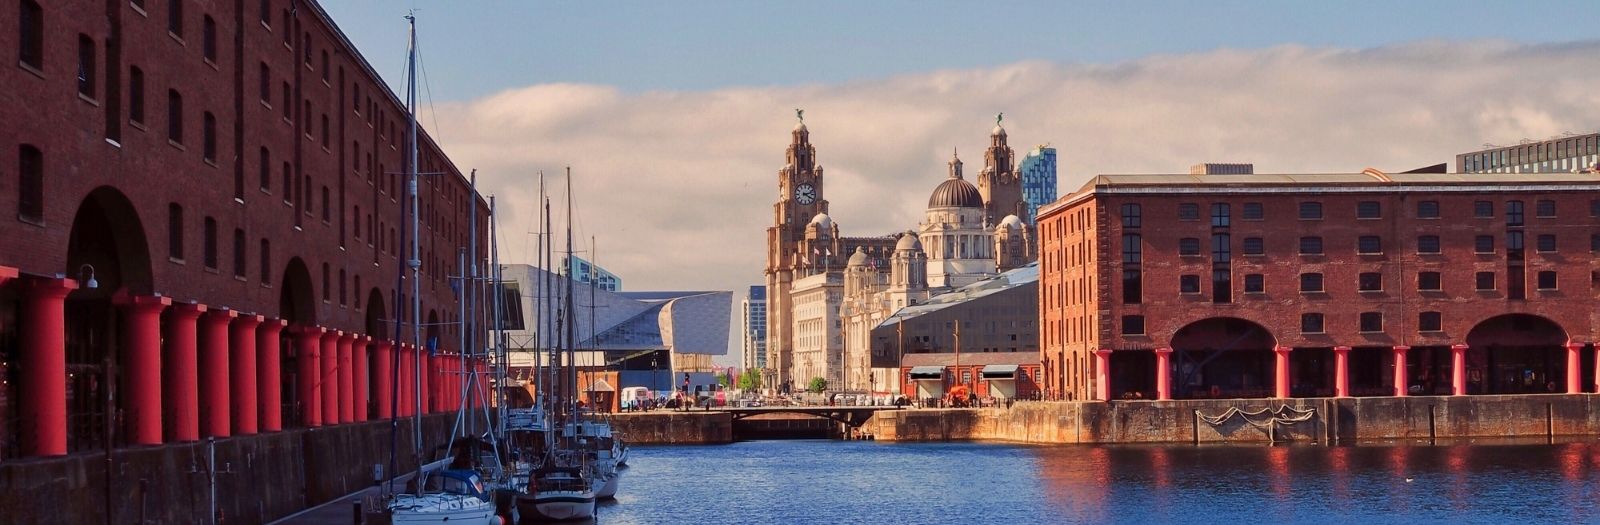 Liver Building and Albert Docks, Liverpool, UK